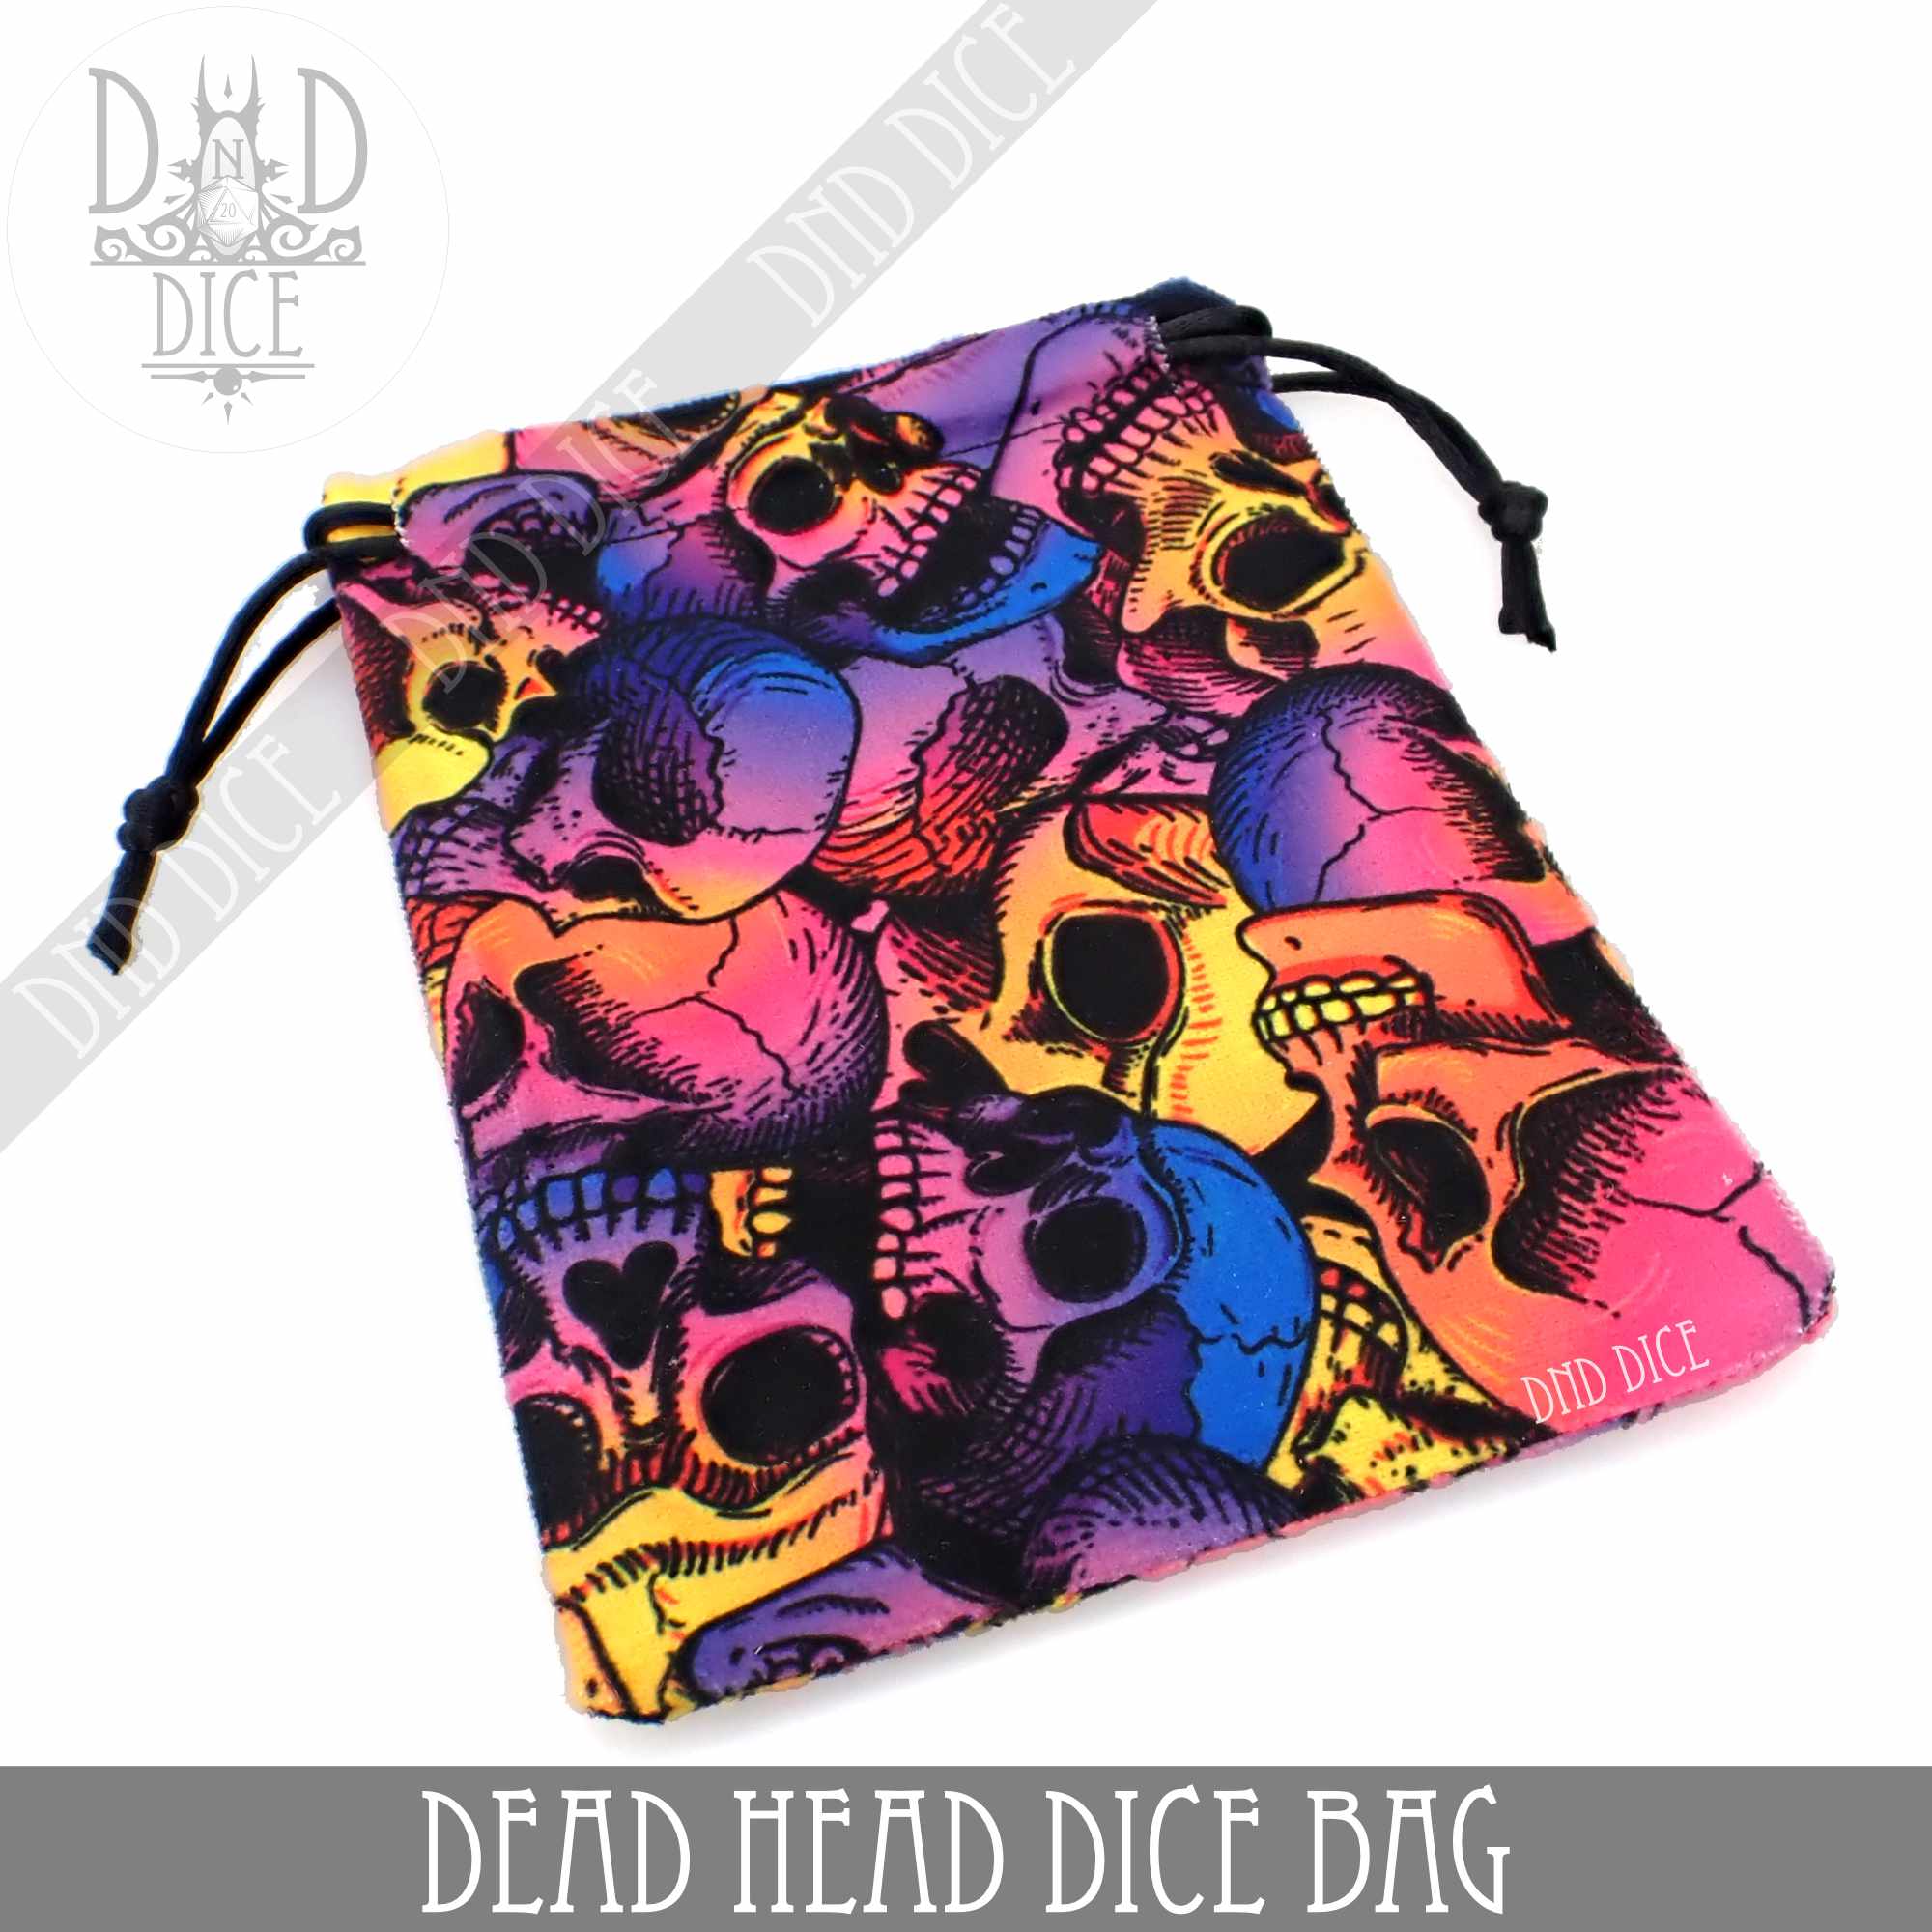 Dead Head Dice Bag